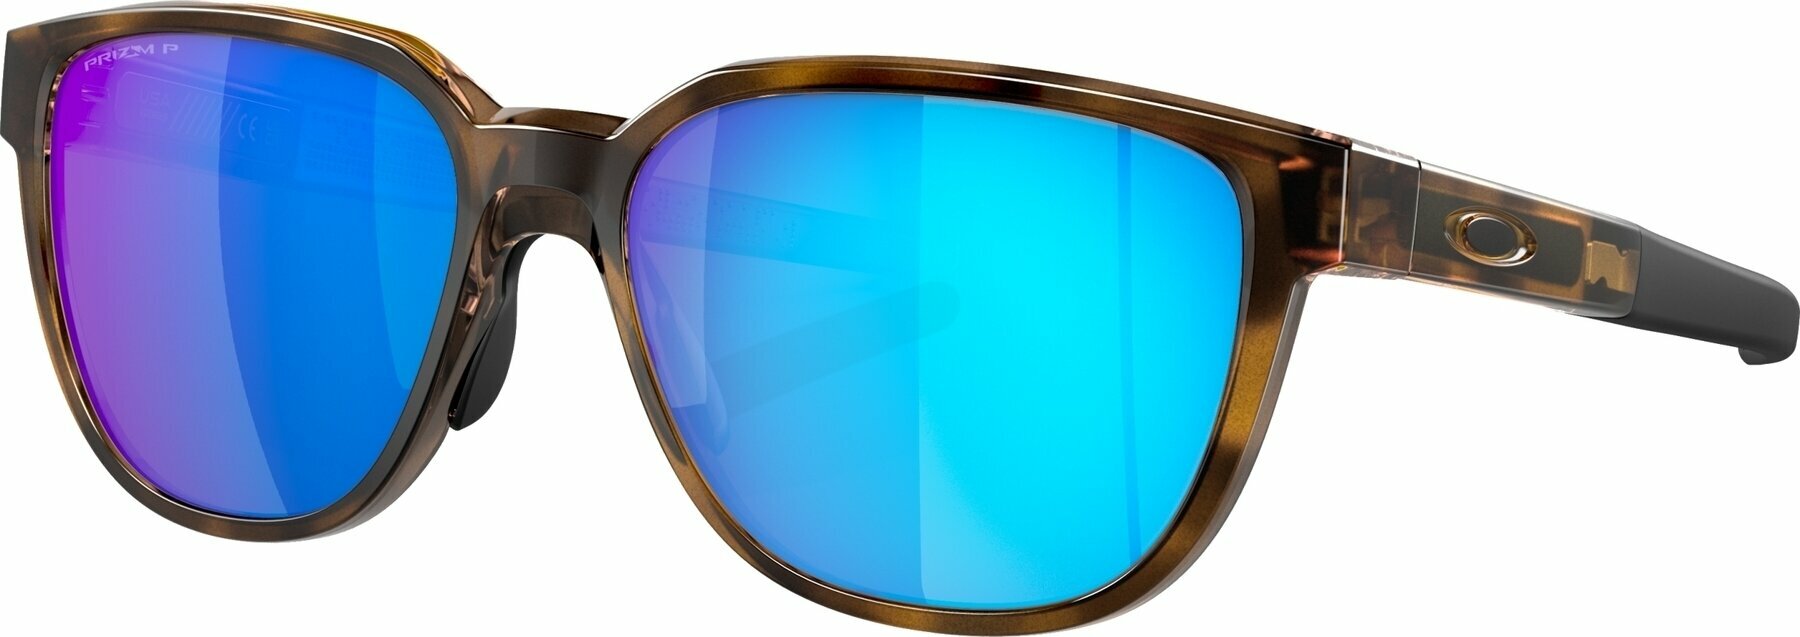 Lifestyle Glasses Oakley Actuator 92500457 Brown Tortoise/Prizm Sapphire Polarized L Lifestyle Glasses